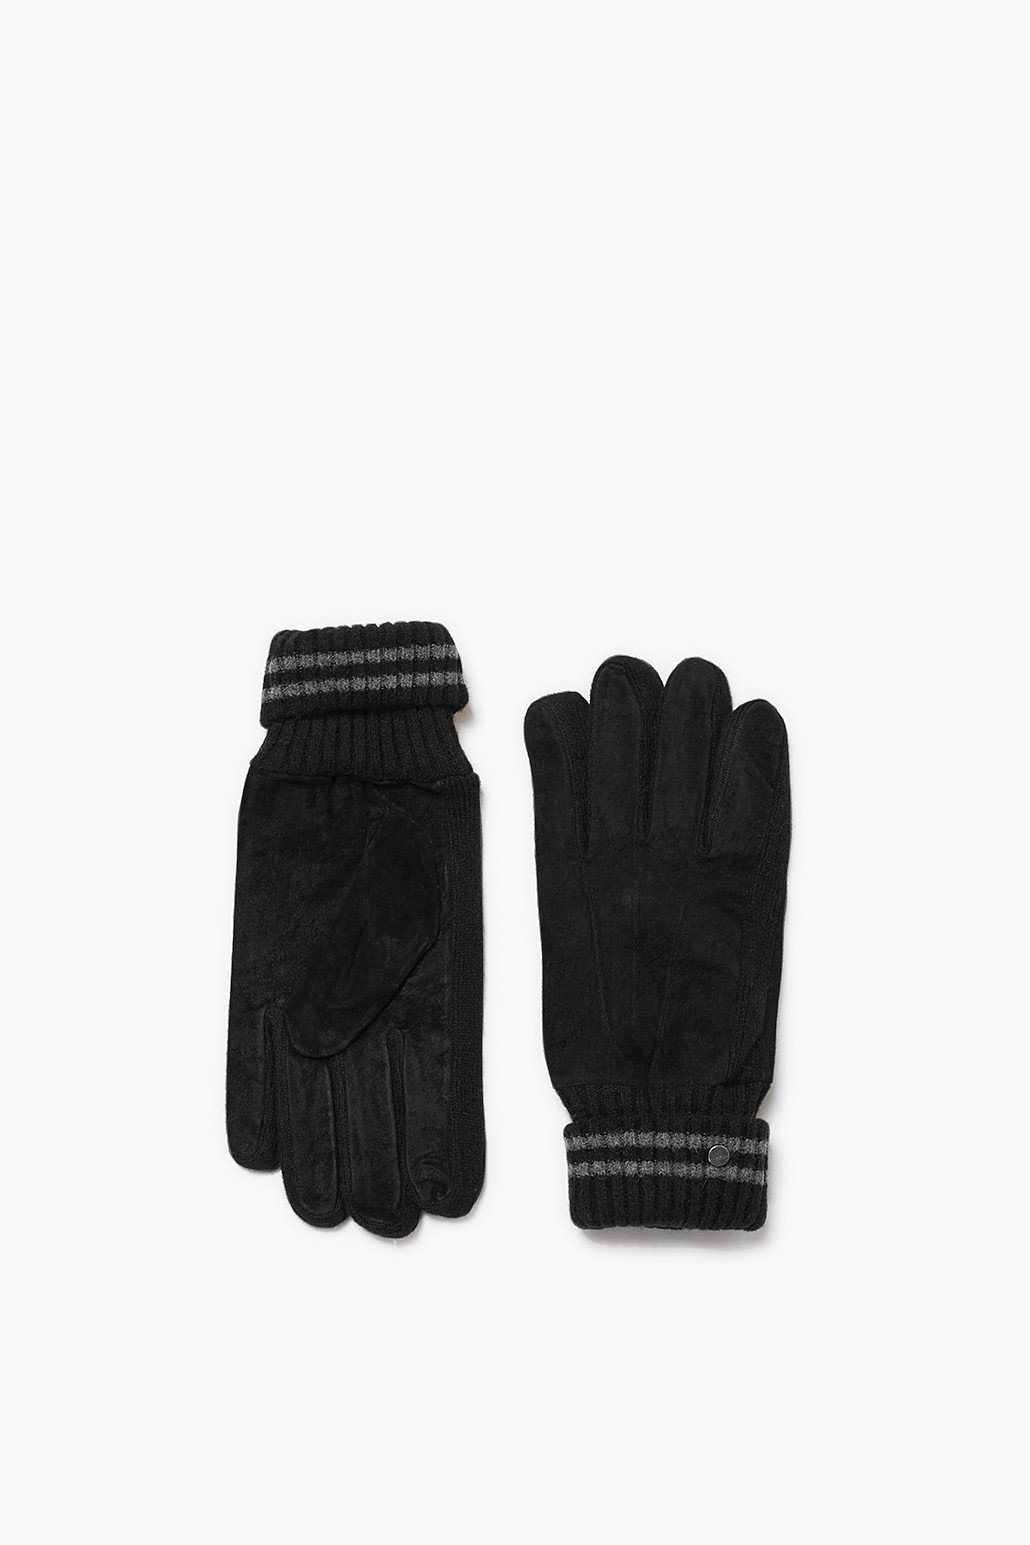 ESPRIT CASUAL Veloursleder Handschuhe mit Fleece Futter